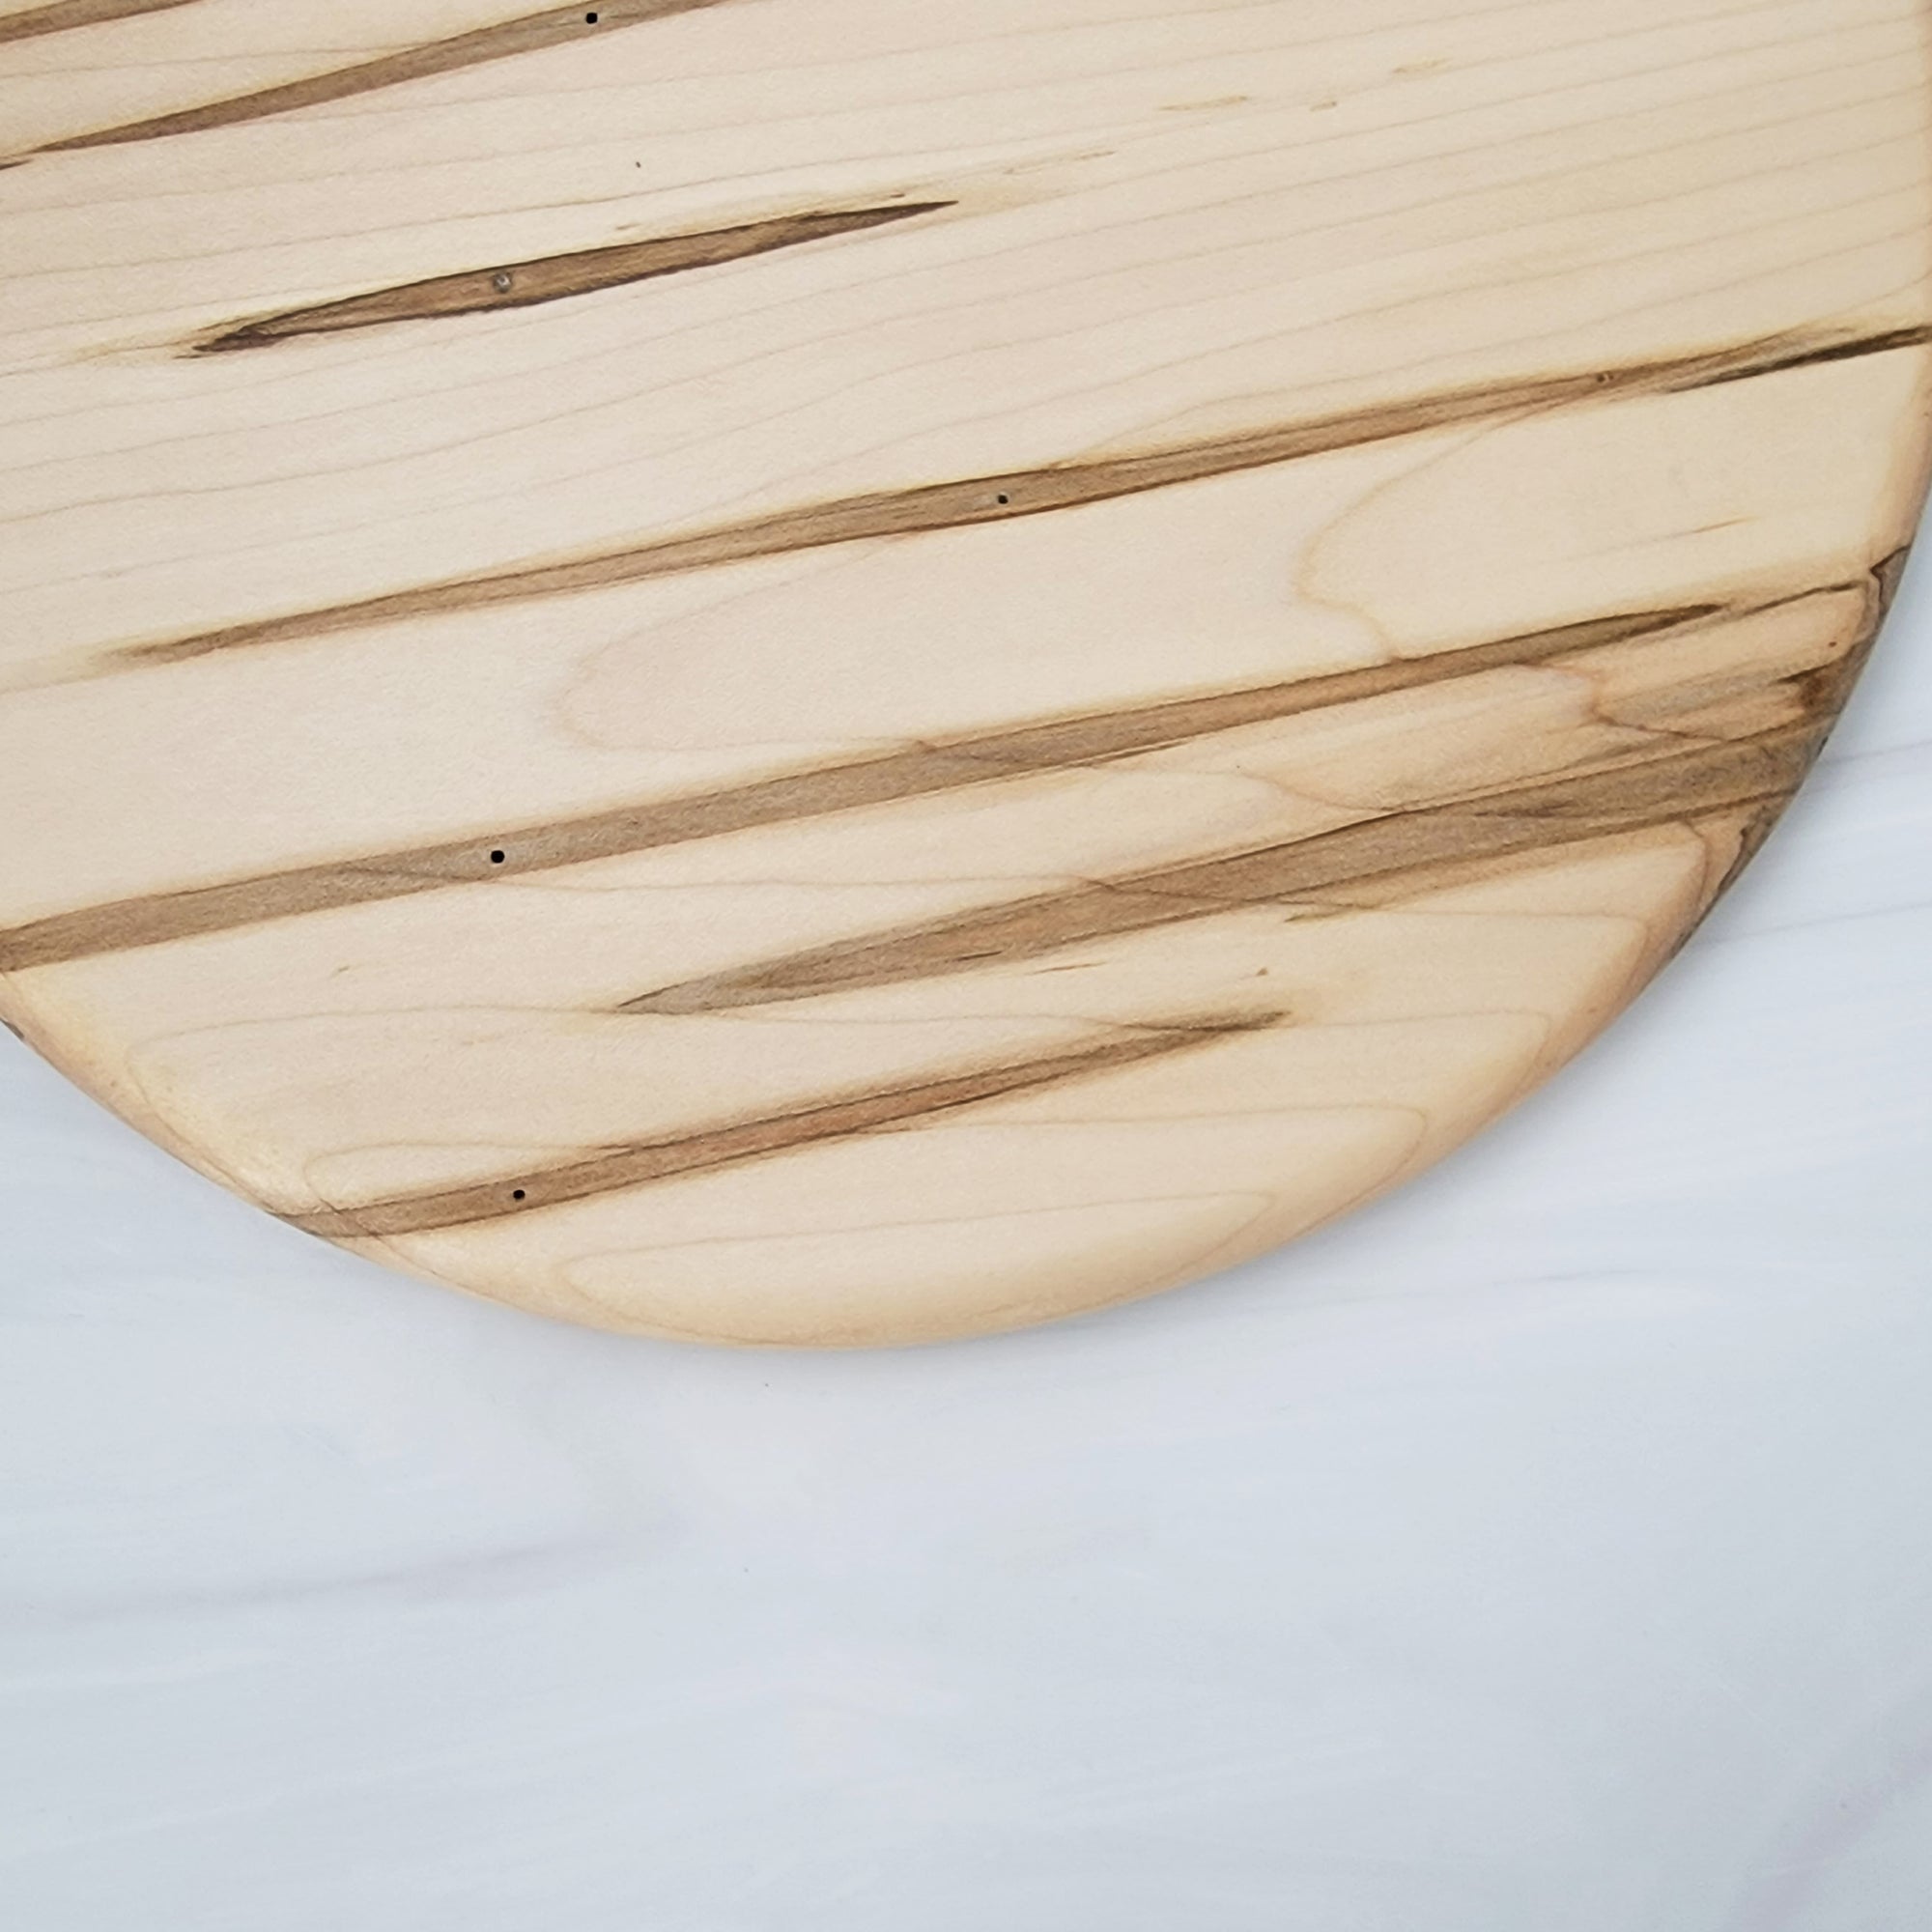 Round ambrosia maple wood cutting board